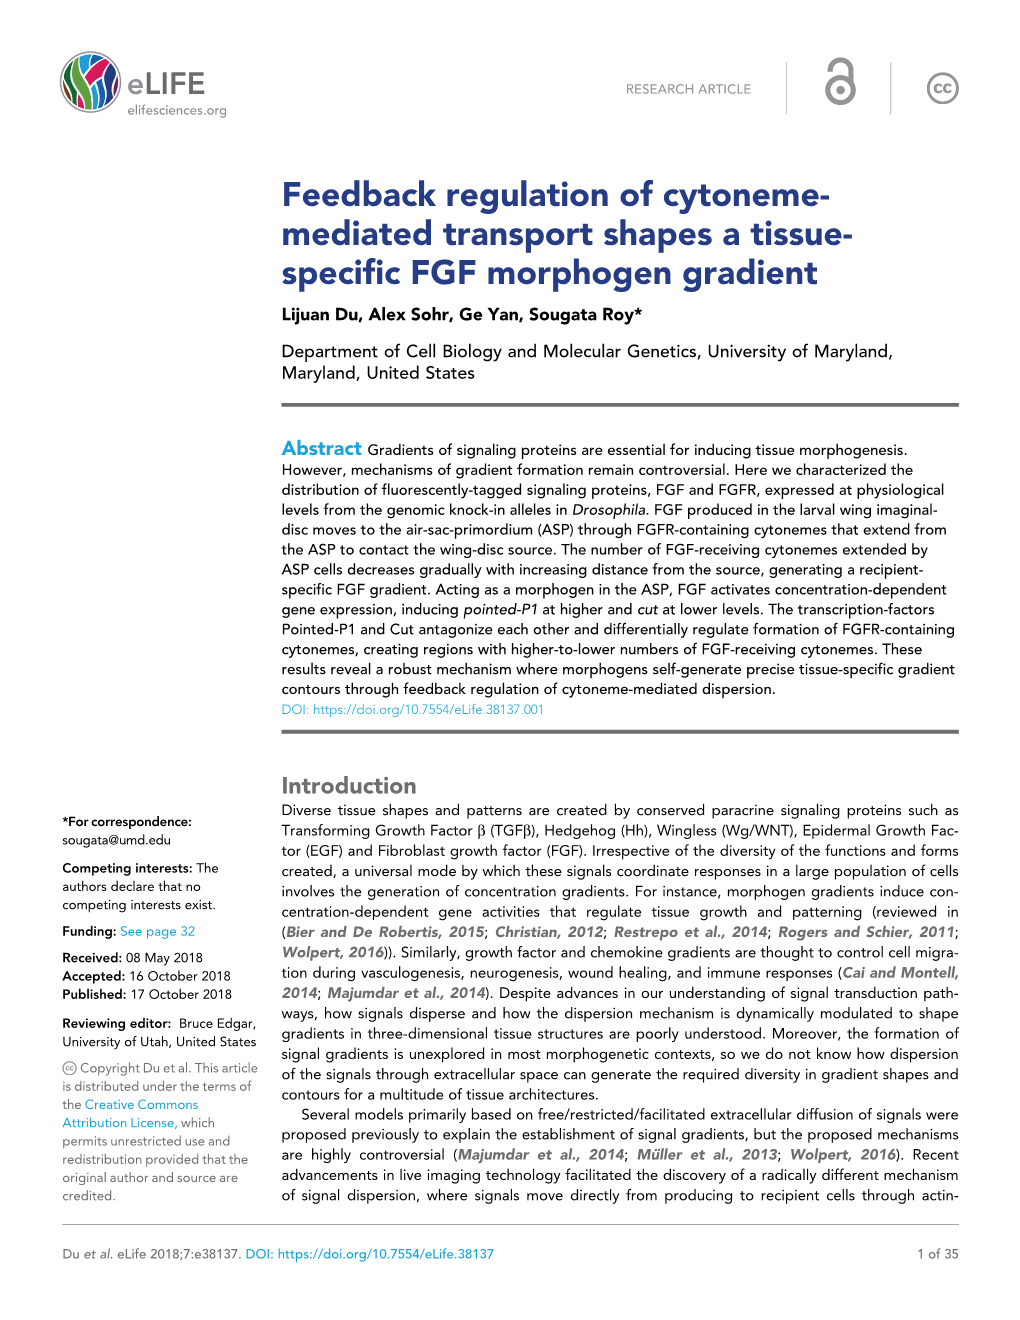 Feedback Regulation of Cytoneme- Mediated Transport Shapes a Tissue- Specific FGF Morphogen Gradient Lijuan Du, Alex Sohr, Ge Yan, Sougata Roy*